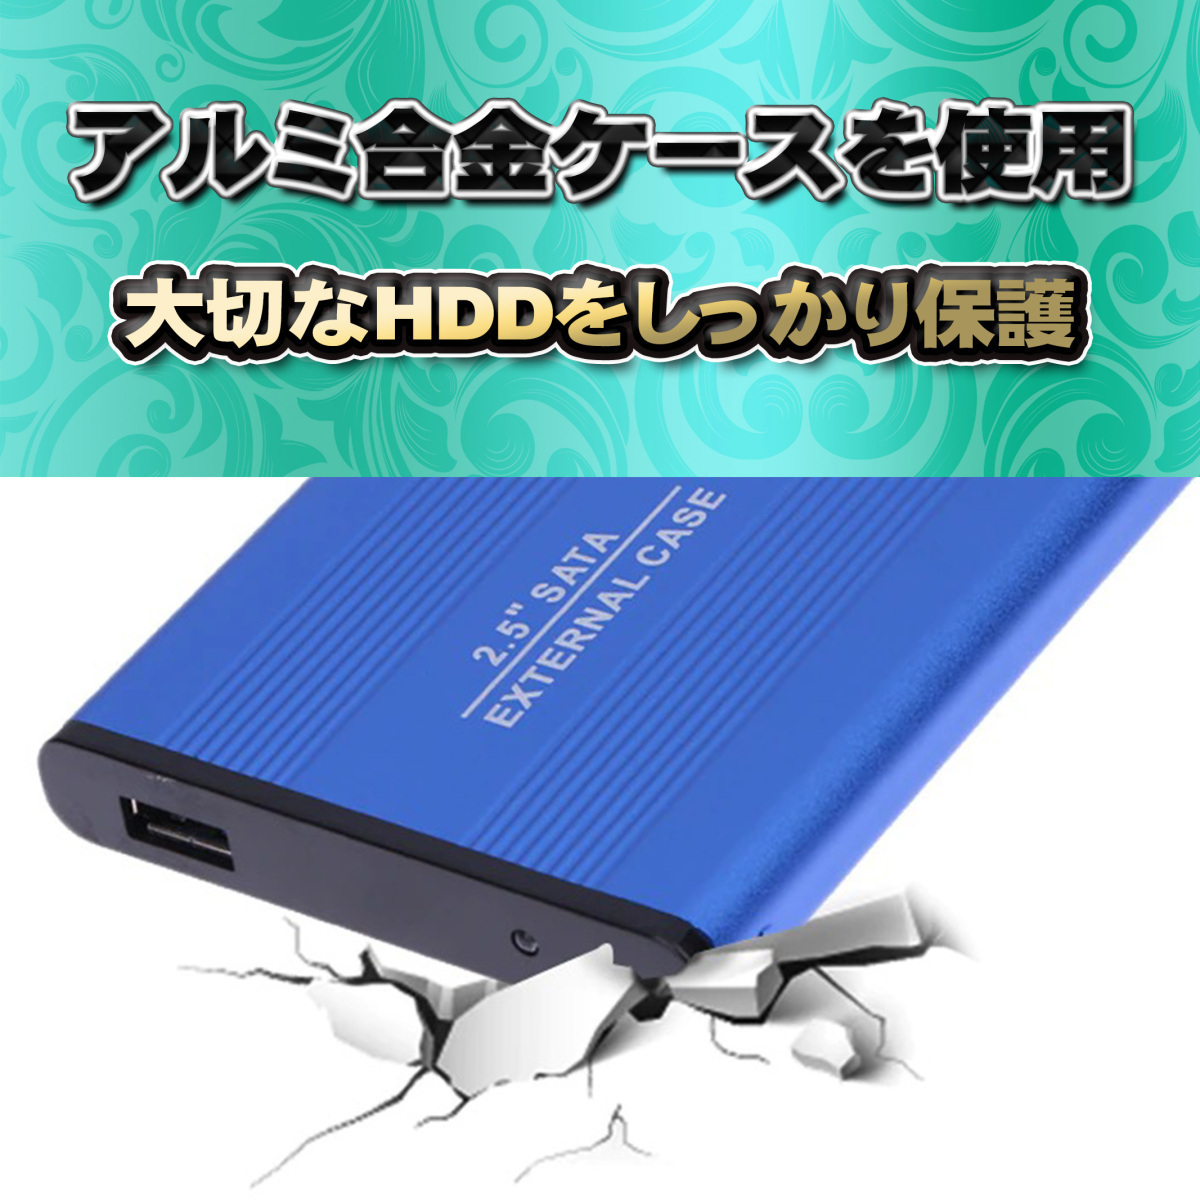 【USB3.0対応】【アルミケース】 2.5インチ HDD SSD ハードディスク 外付け SATA 3.0 USB 接続 【シルバー】_画像5